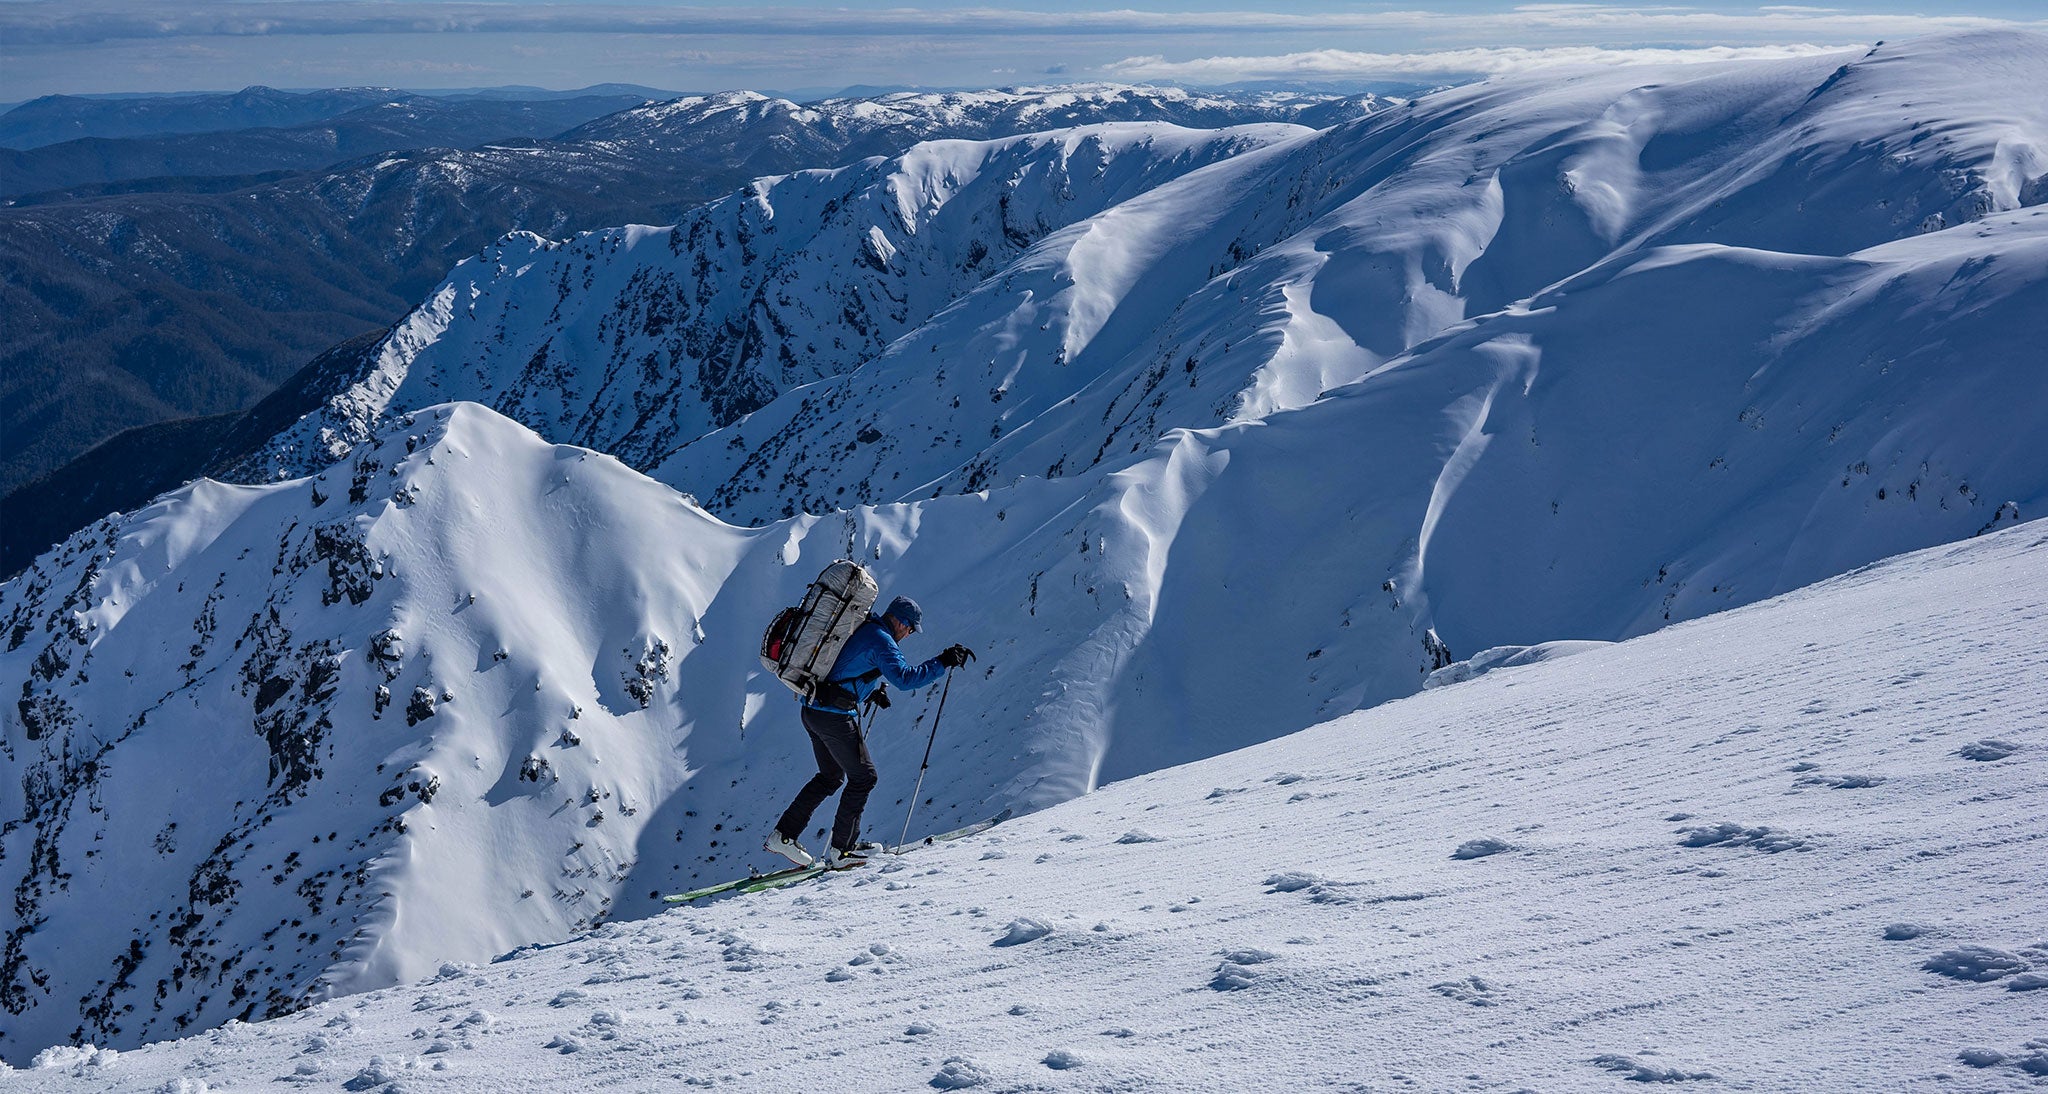 Backcountry skiier hikes along snowy peak